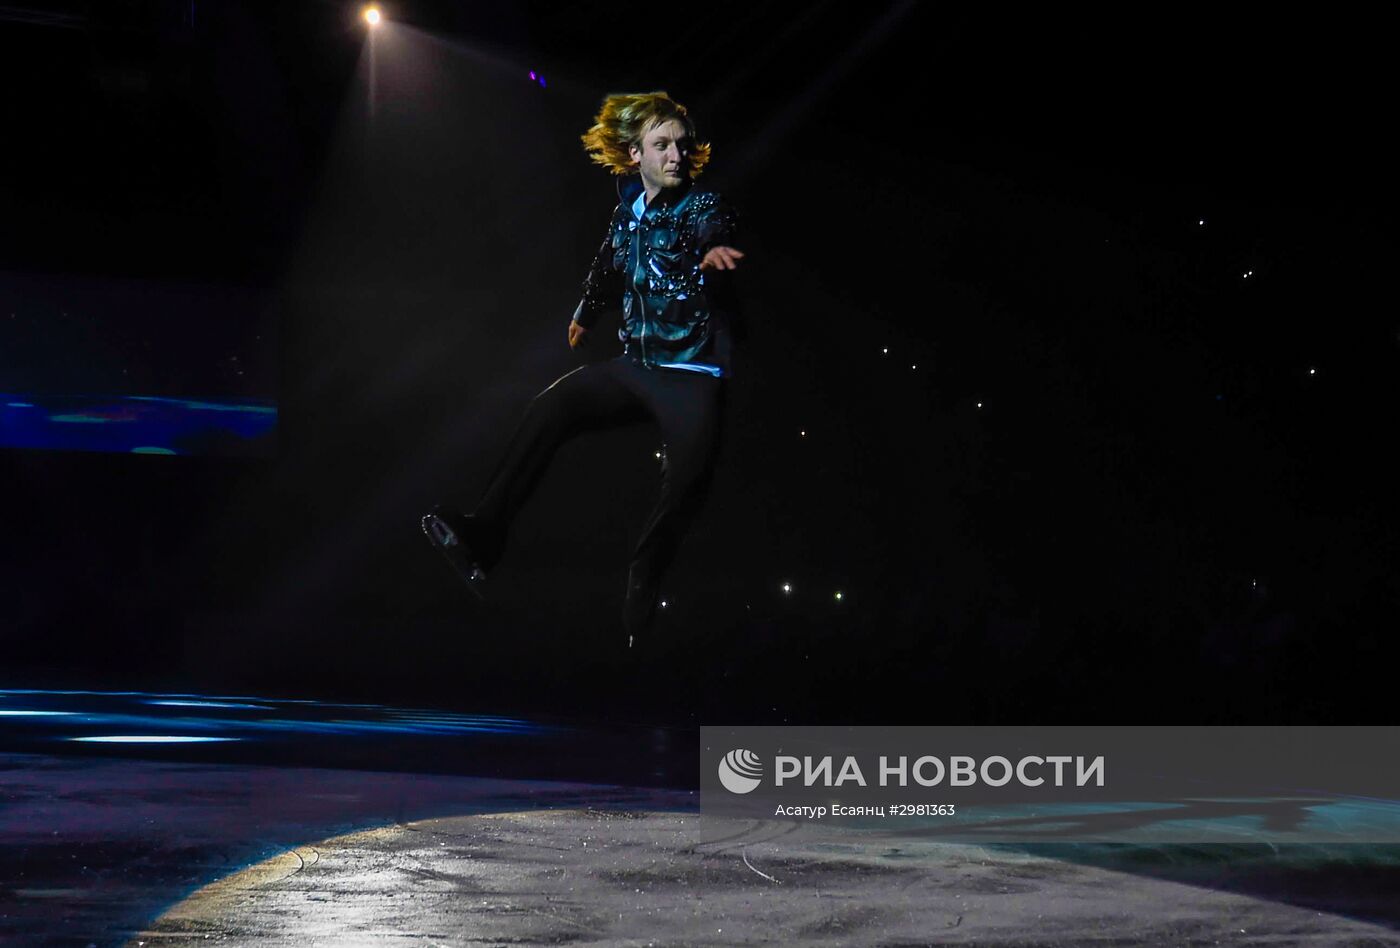 Ледовое шоу "Kings on ice present fashion on ice" в Ереване